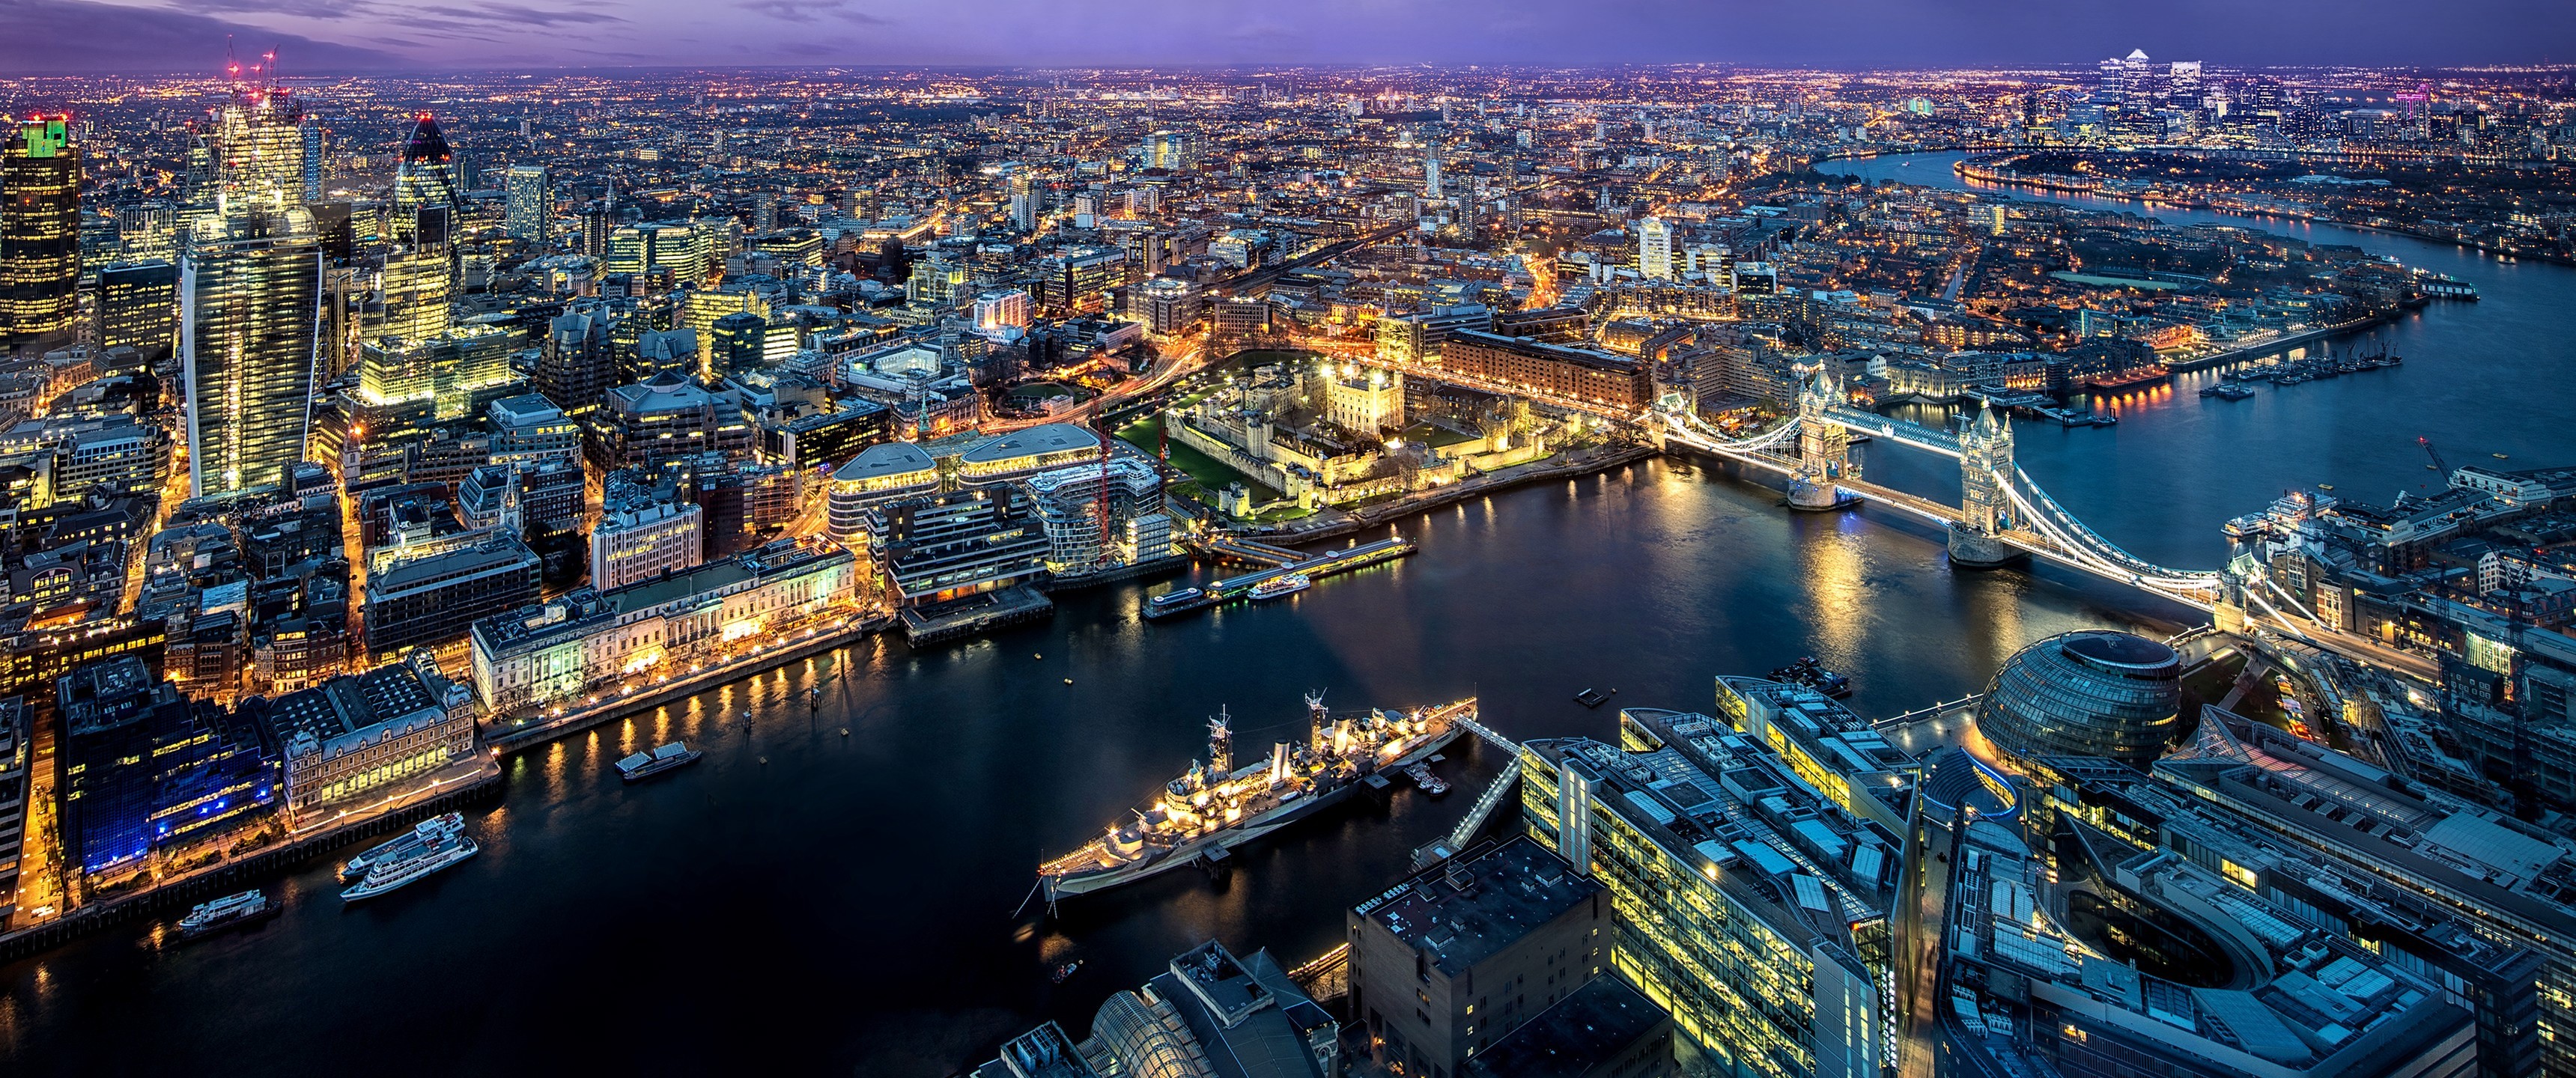 General 3440x1440 London England city lights cityscape River Thames dusk UK river warship Tower Bridge